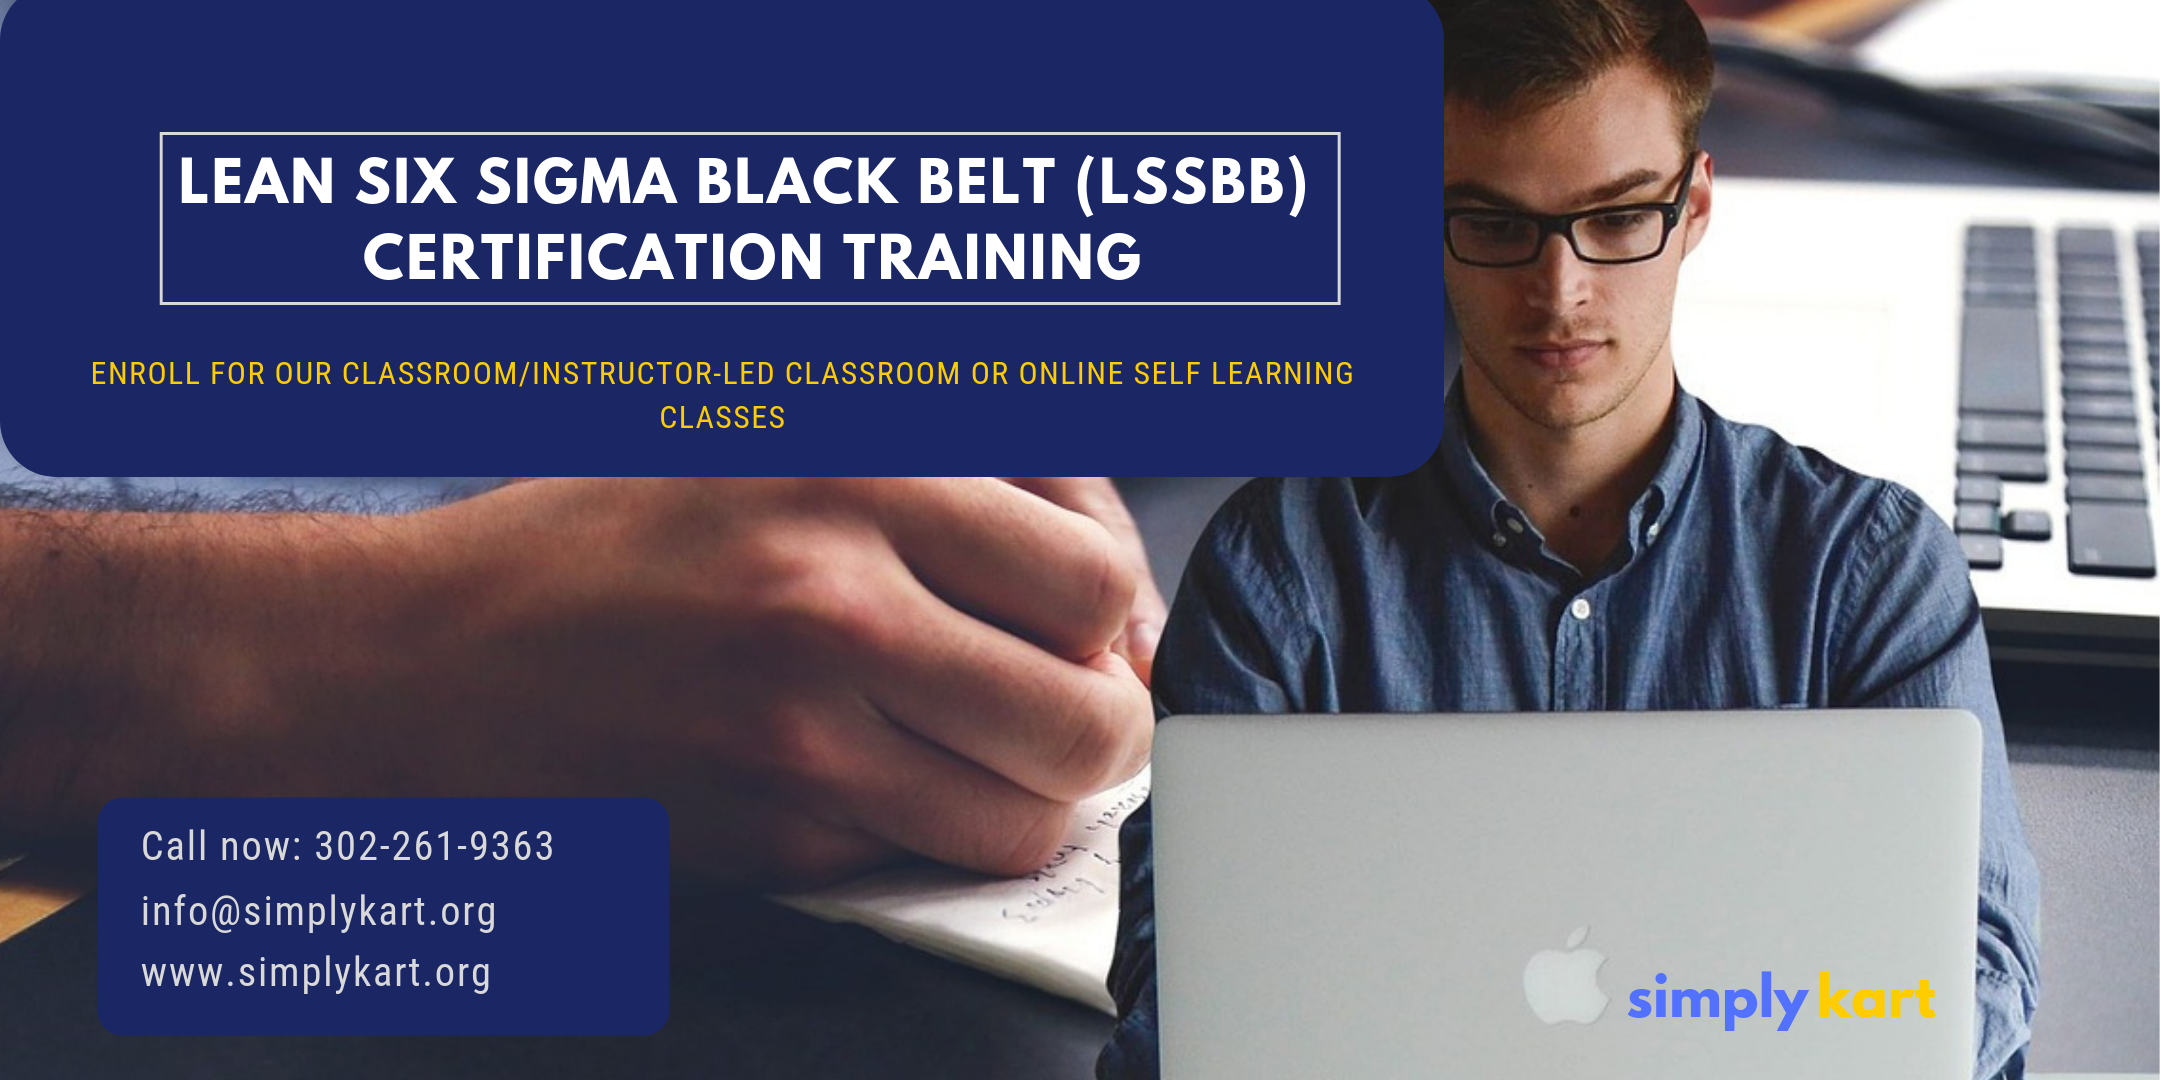 Lean Six Sigma Black Belt (LSSBB) Certification Training in St. Cloud, MN